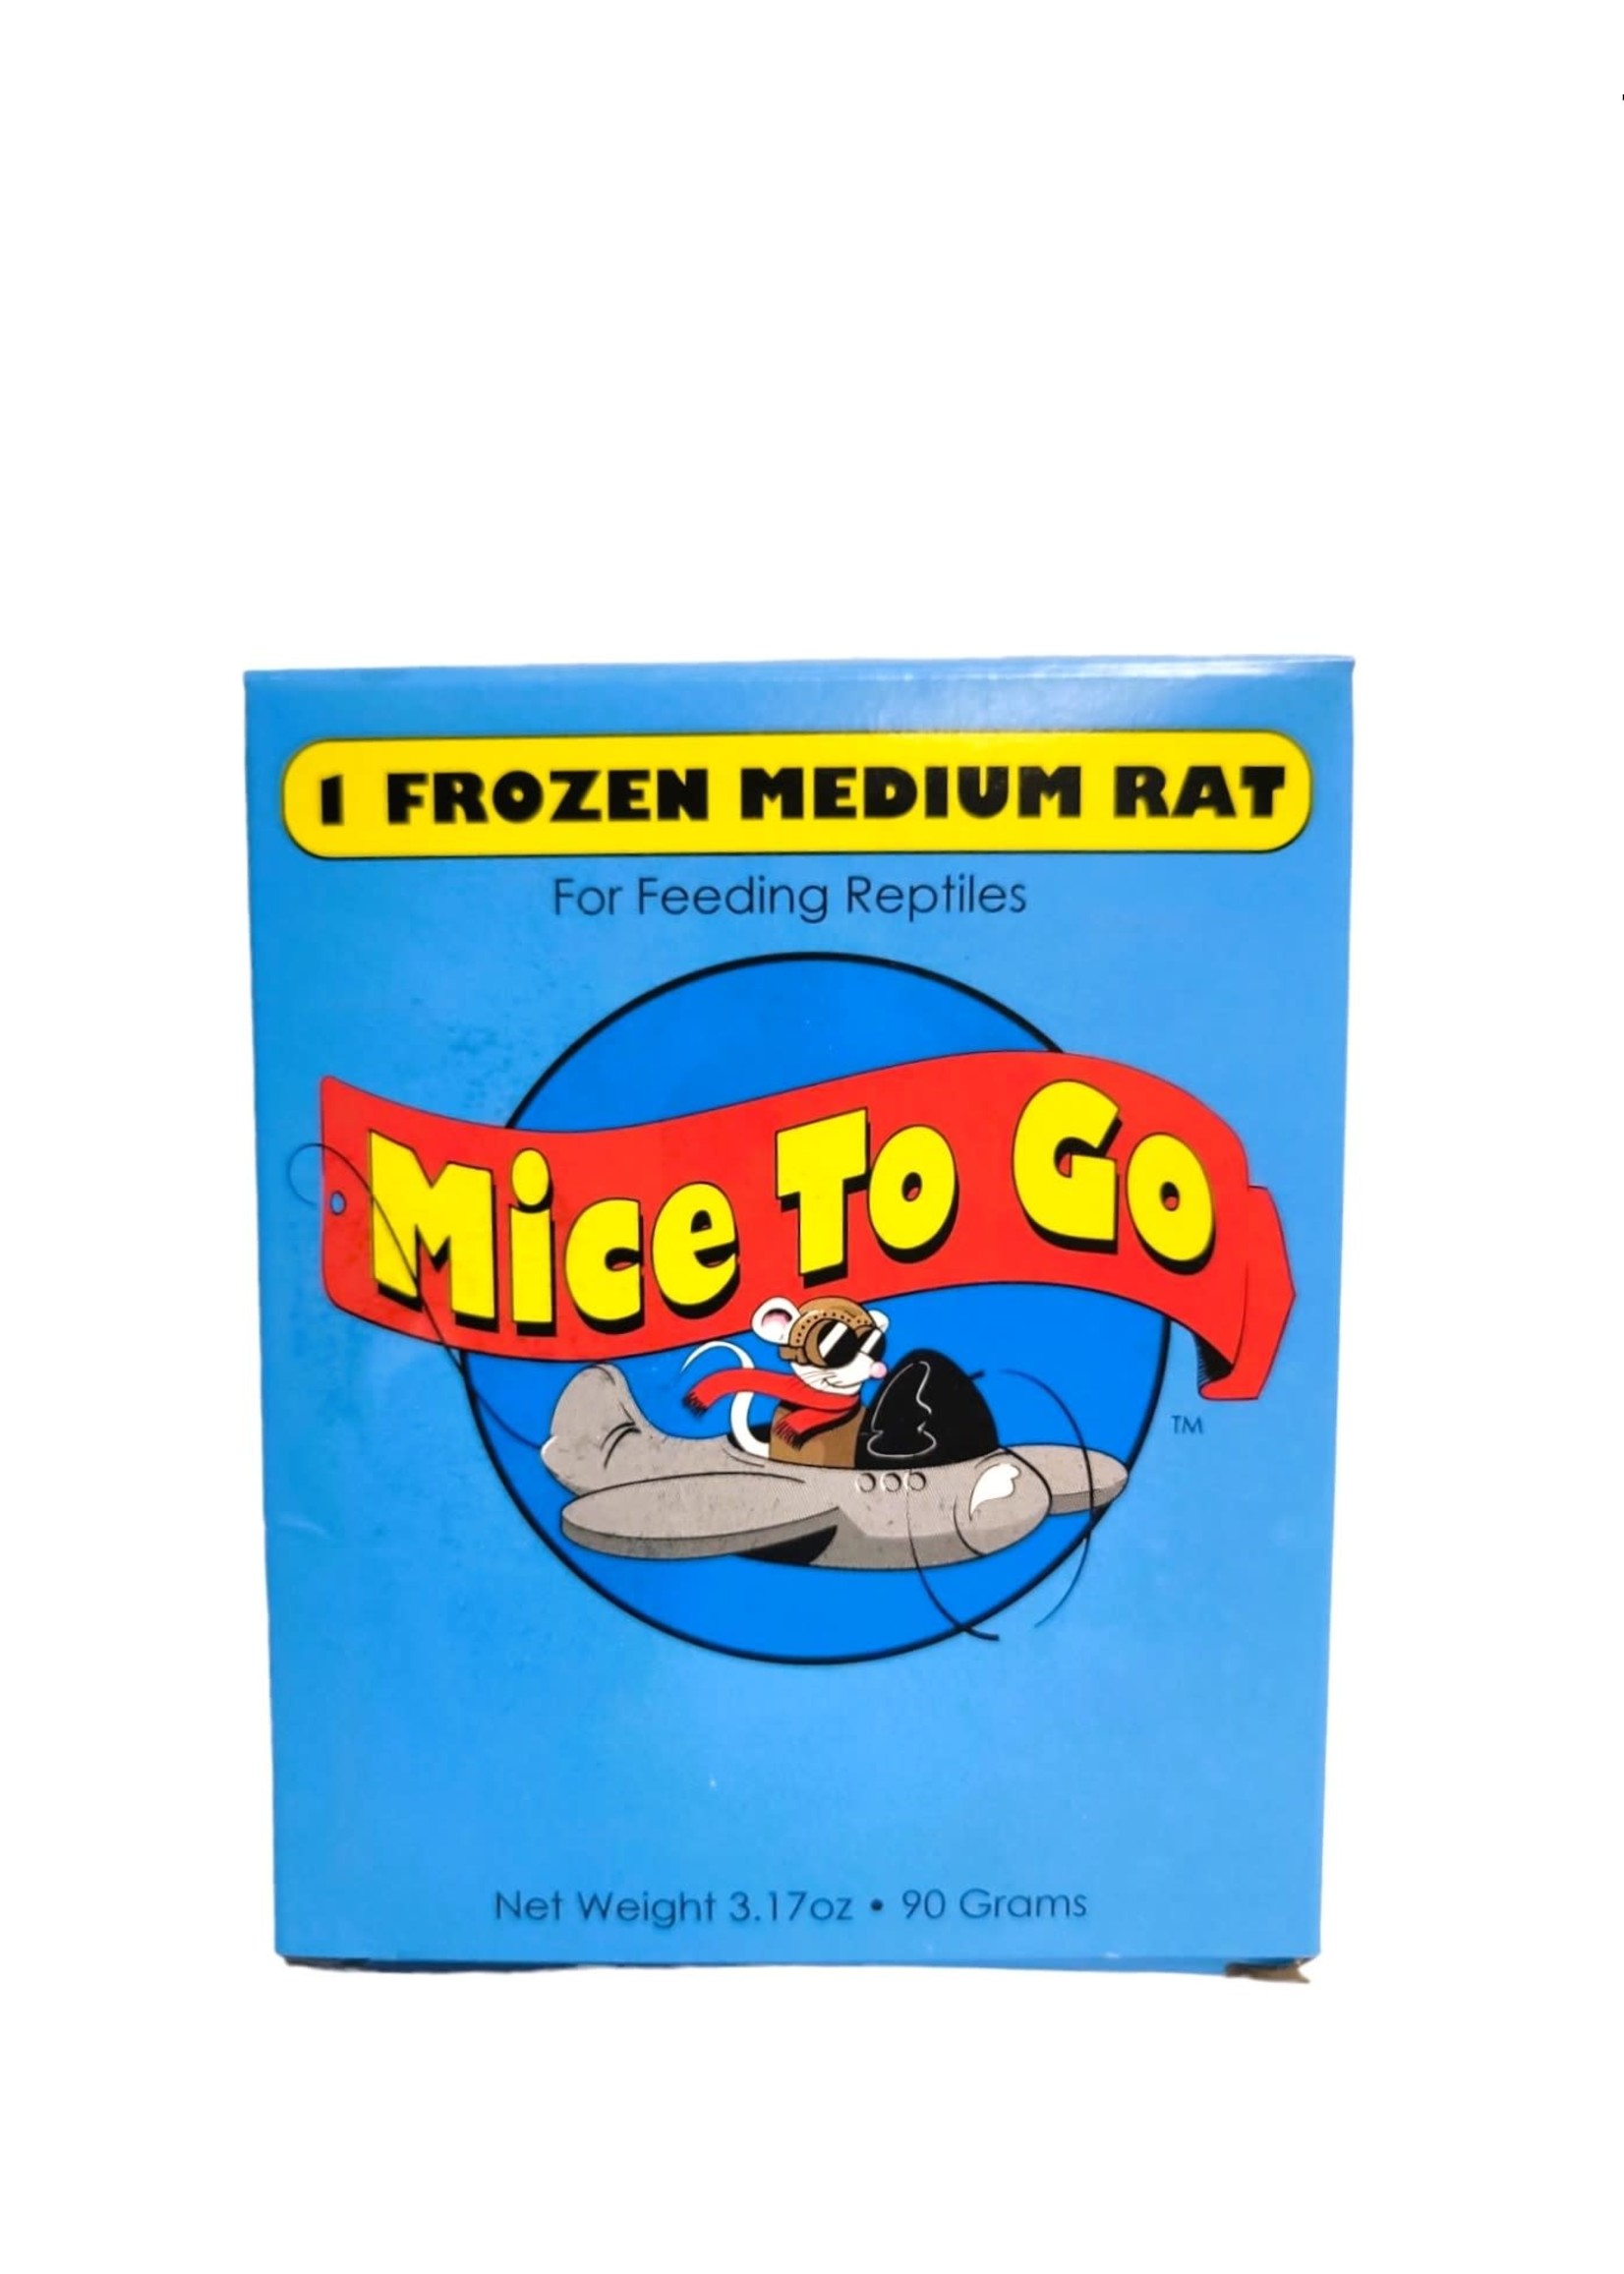 Mice to Go Frozen Medium Rat 1 Pack